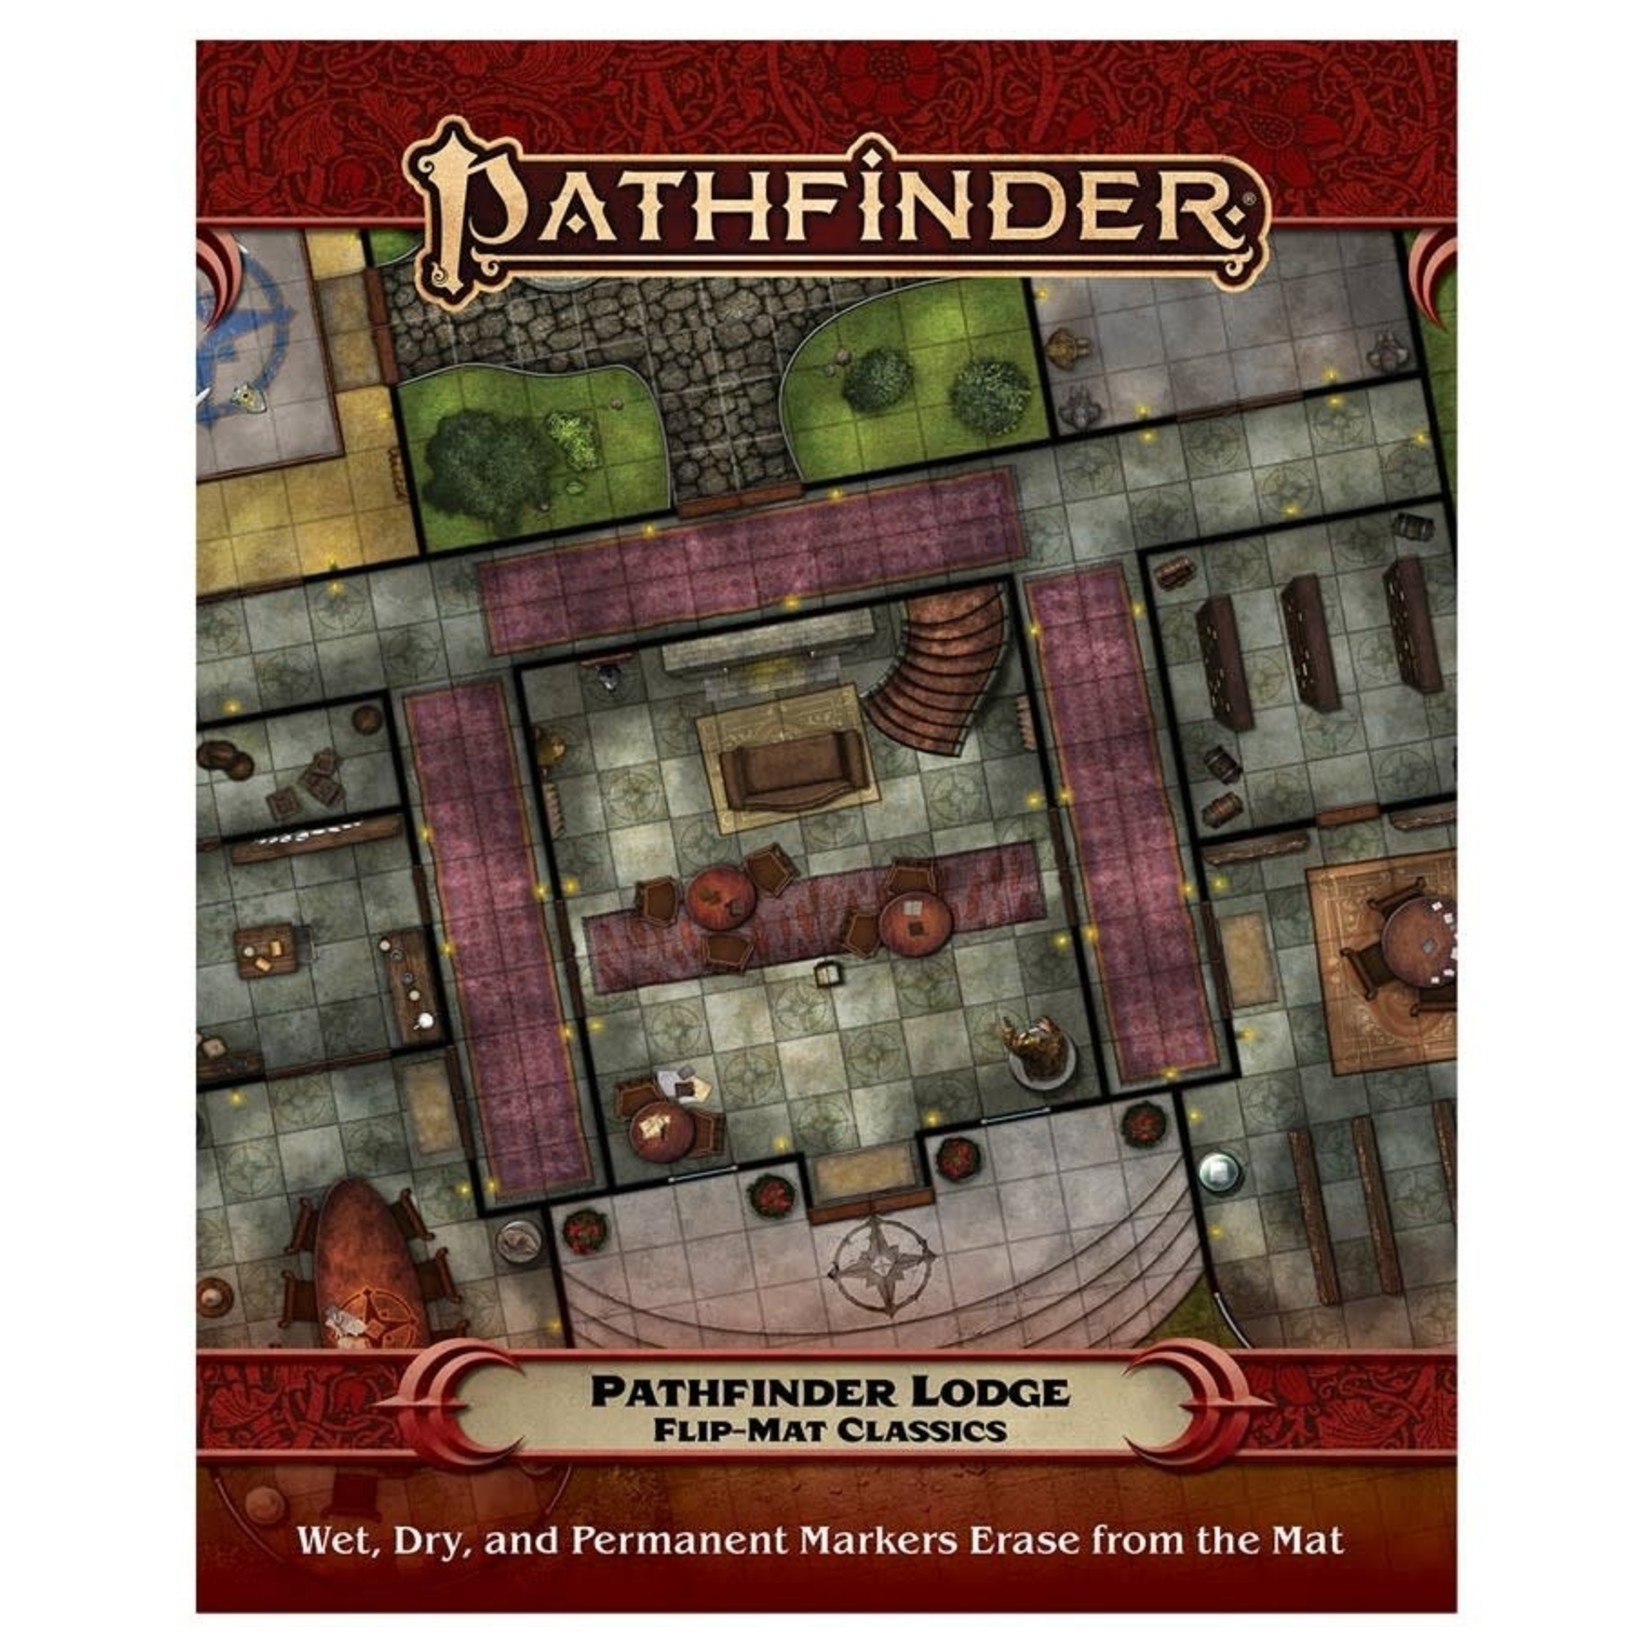 Paizo Pathfinder Flip-Mat Classics: Pathfinder Lodge